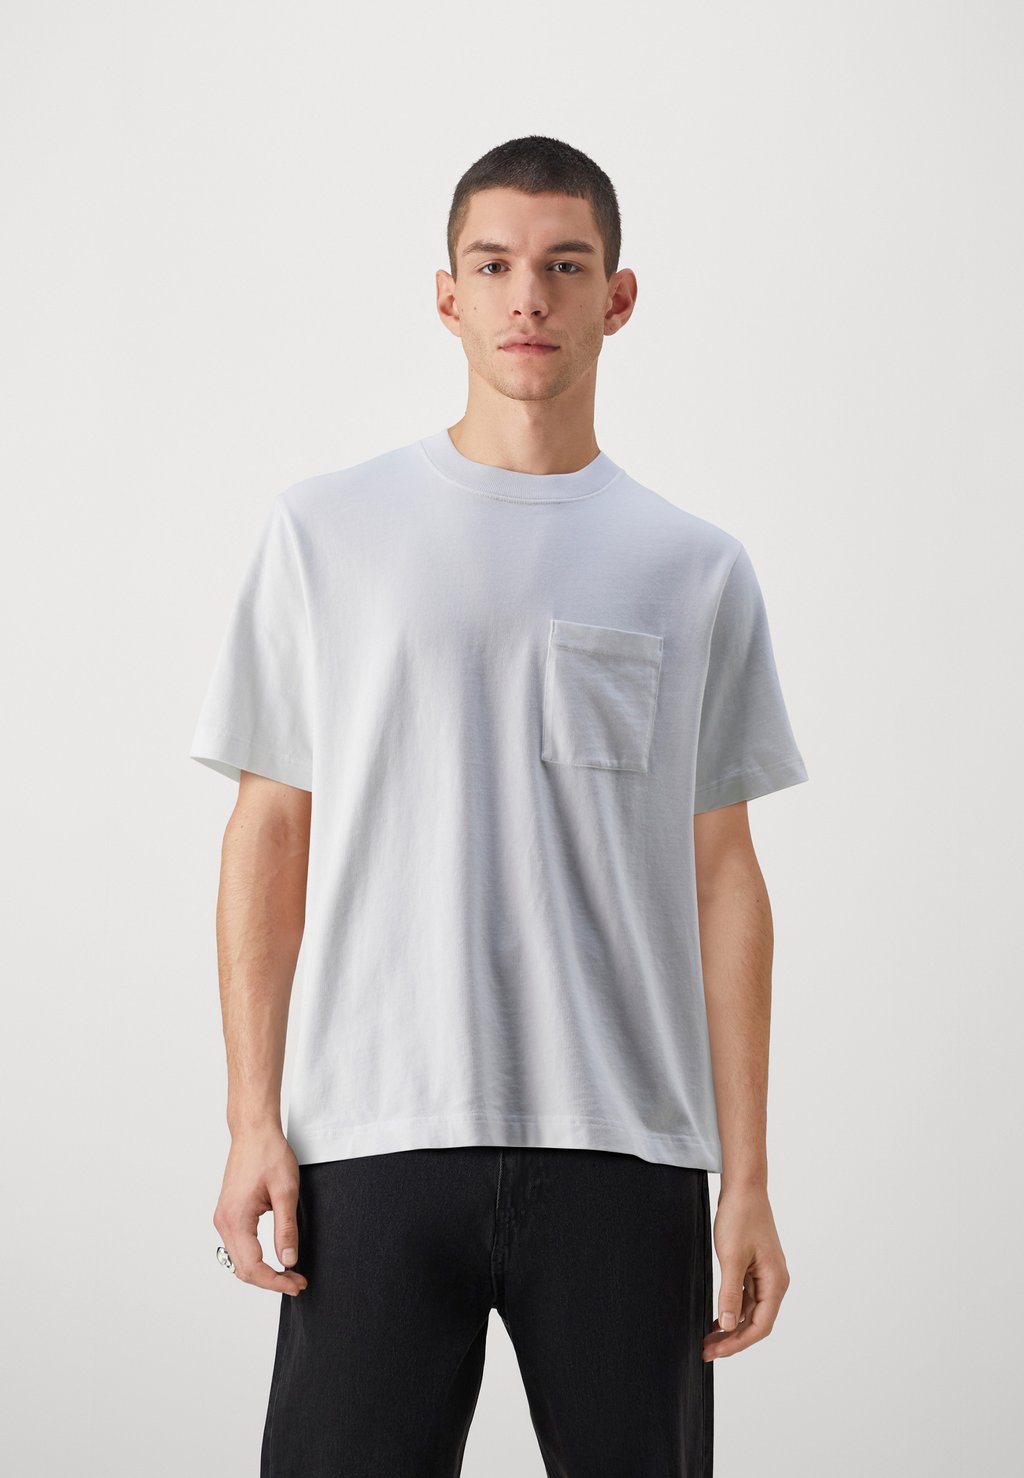 Базовая футболка Abercrombie & Fitch, ярко-белая